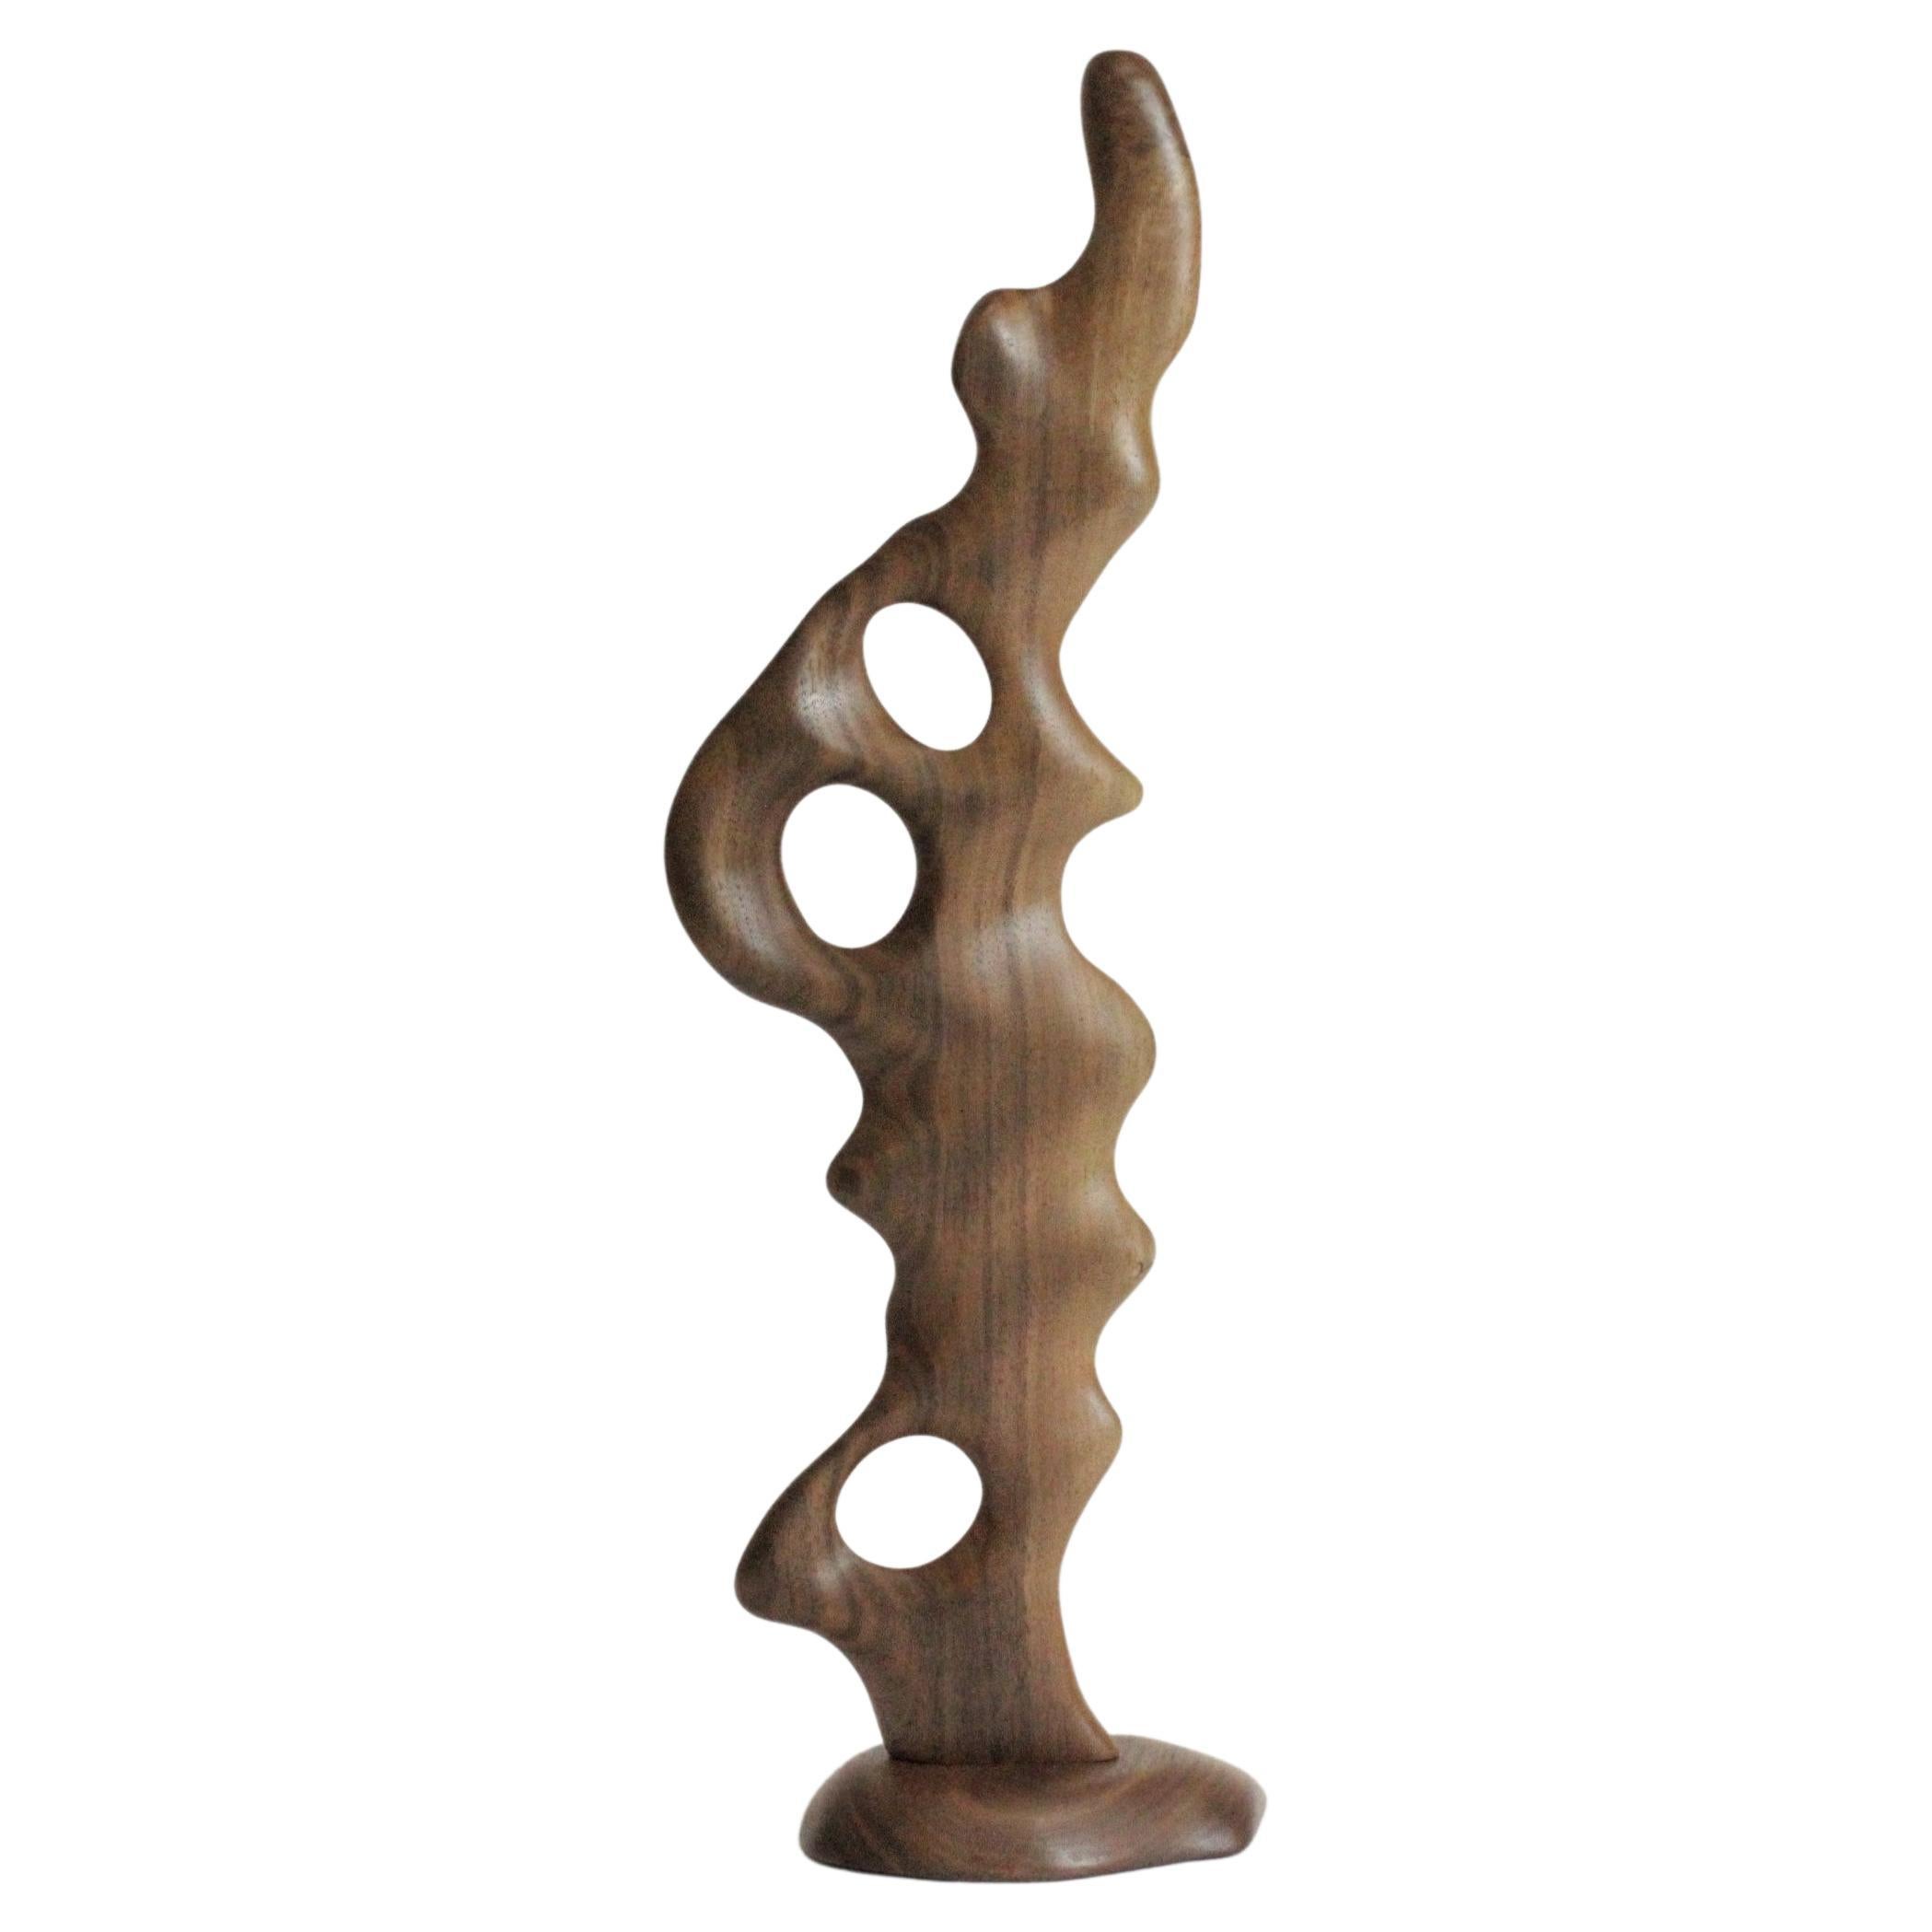 Hand Carved Biomorphic Wooden Sculpture II